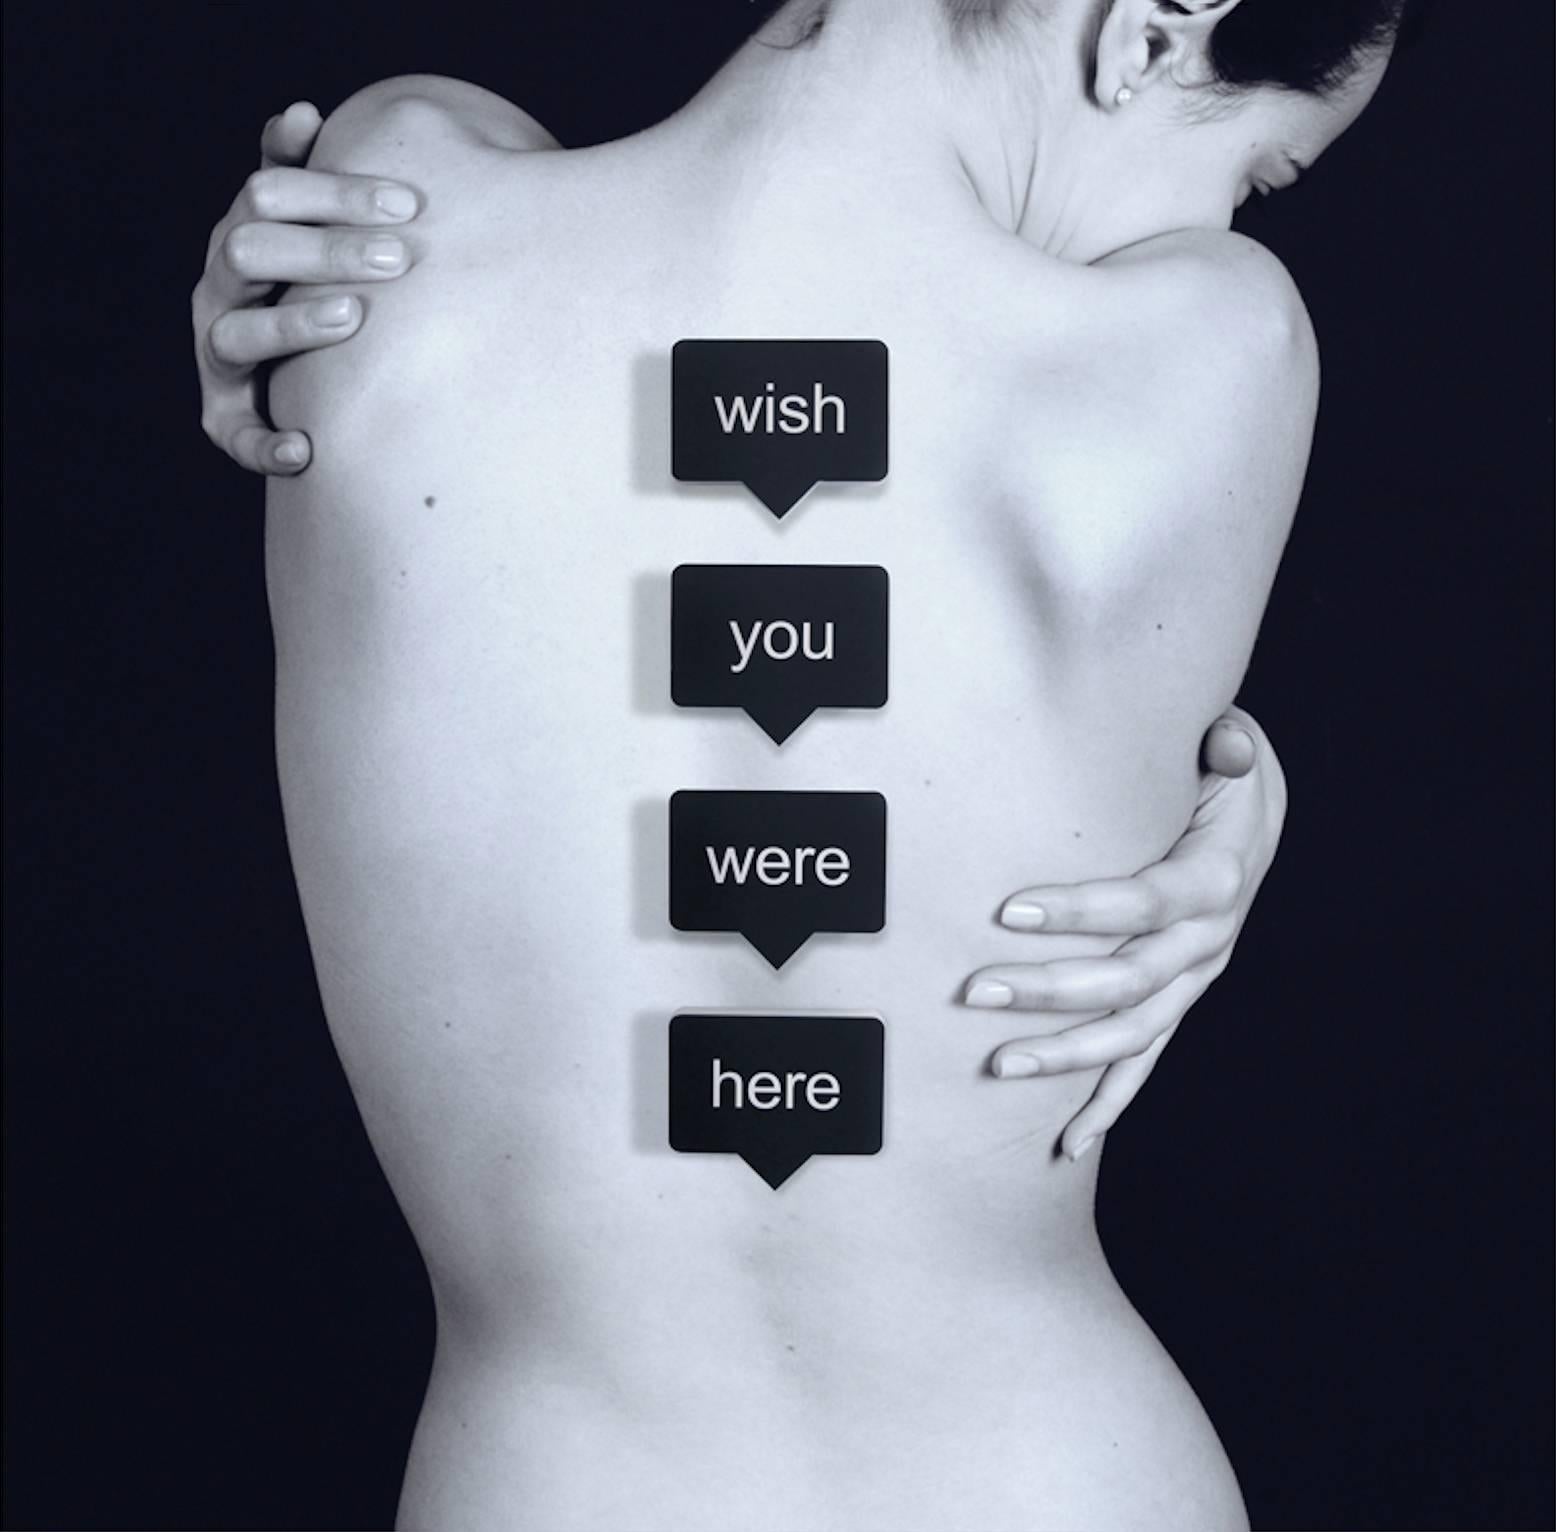 Sara Zaher Nude Print - "Wish You Were Here" - nude photograph, LED light-box